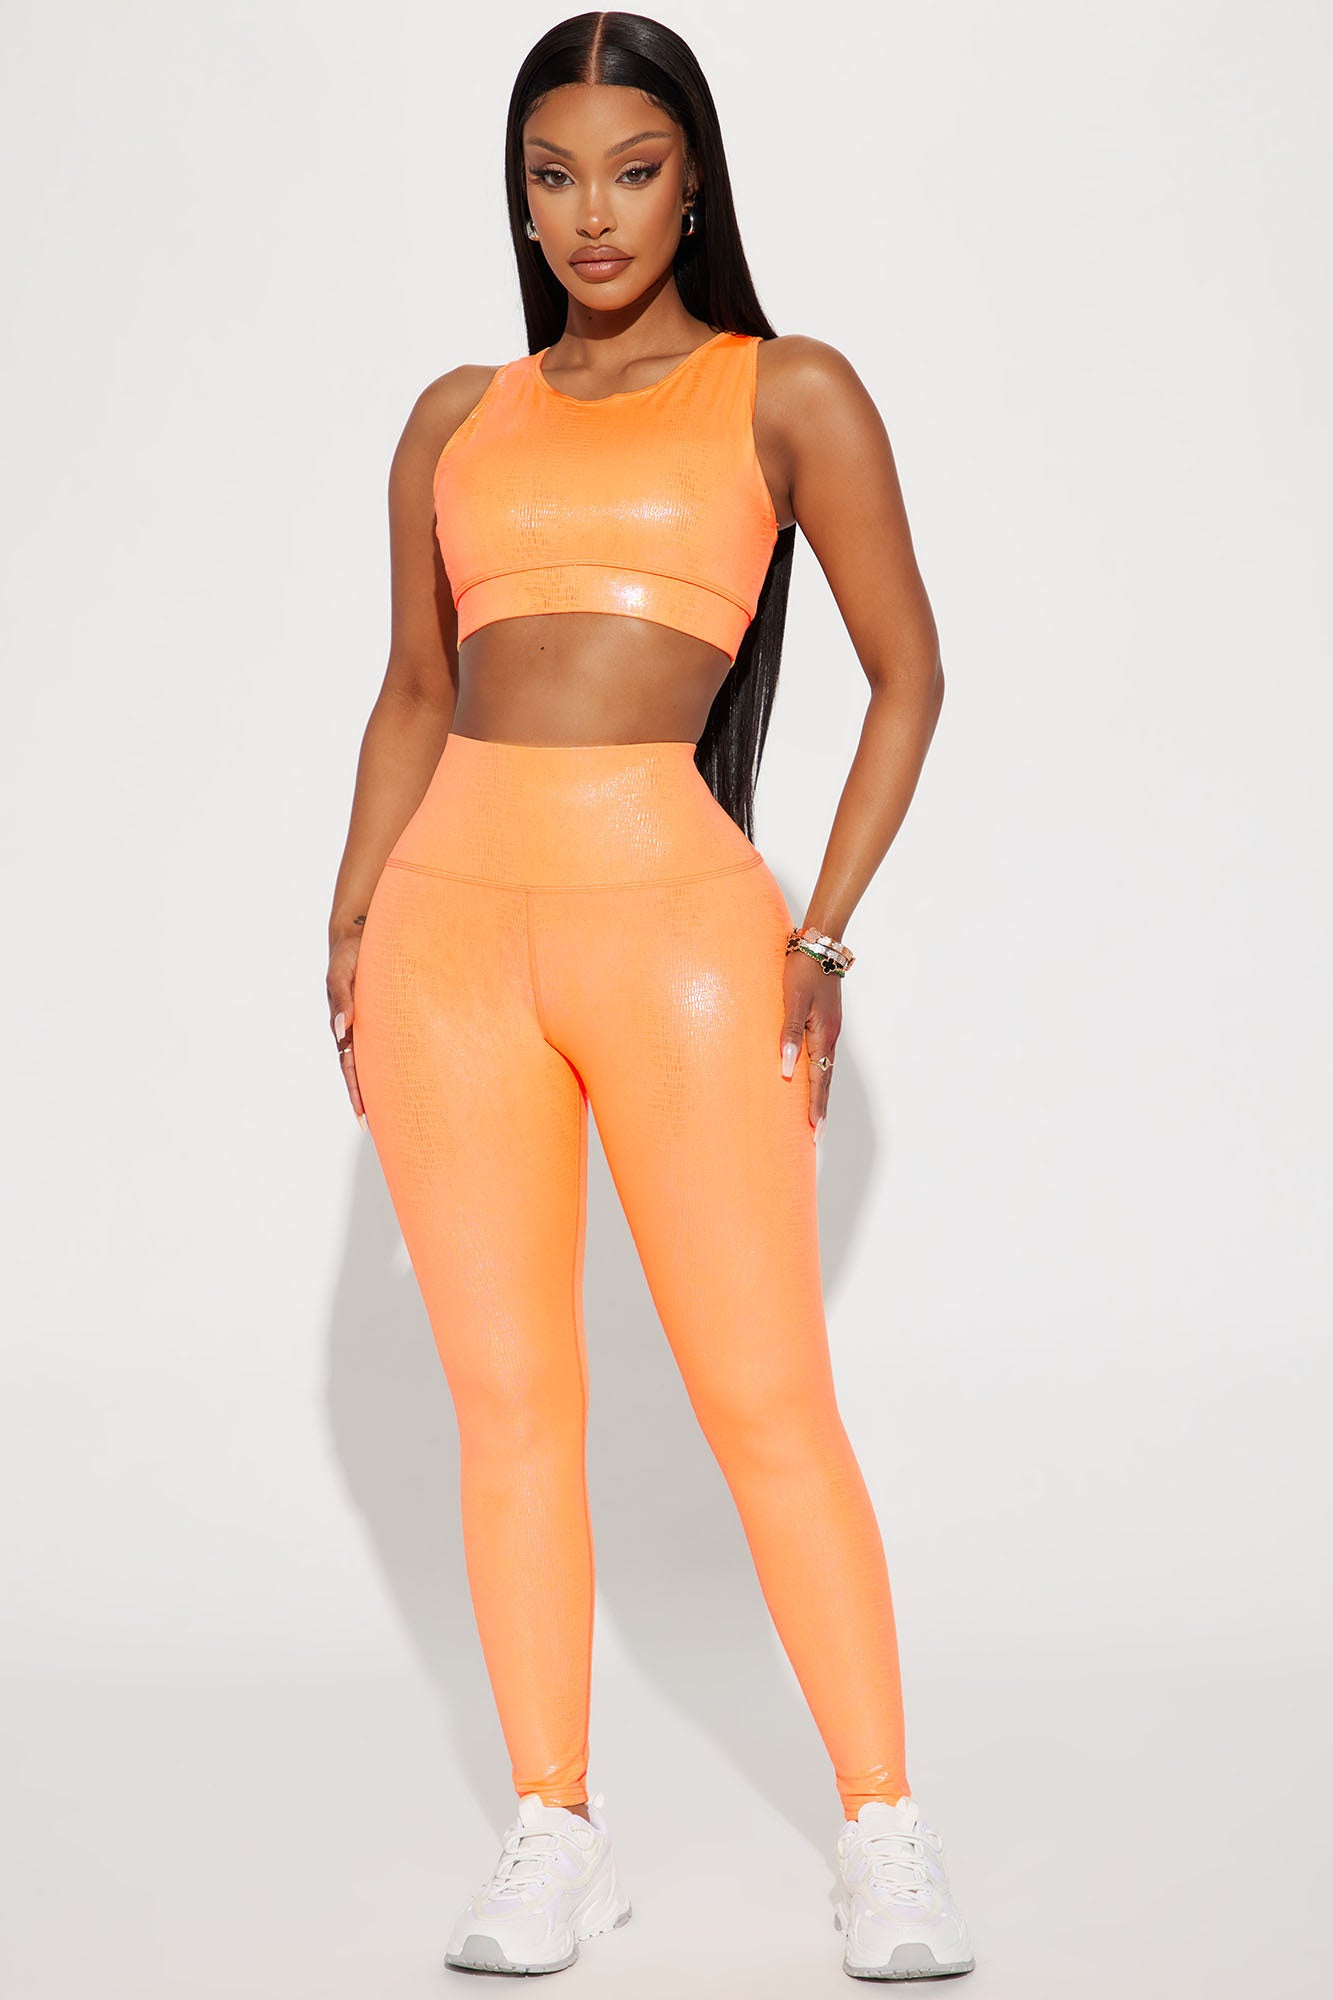 Eye Candy Legging - Orange, Fashion Nova, Nova Sport Bottoms